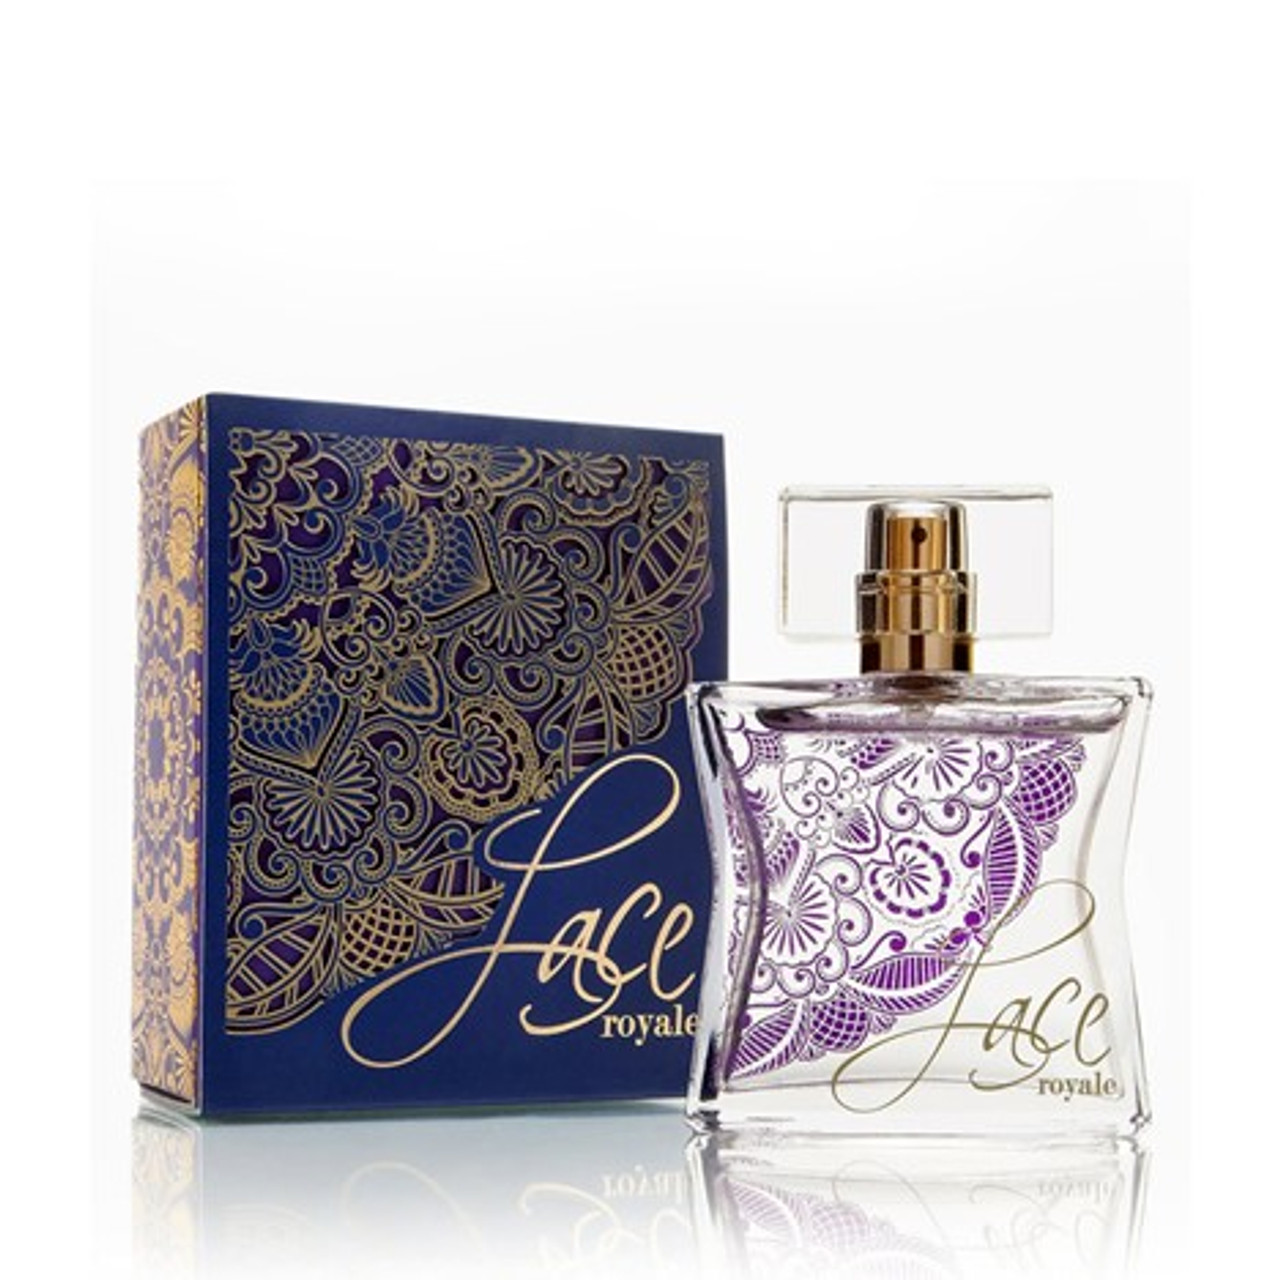 92760 LACE ROYALE PERFUME TRU Fragrance & Beauty